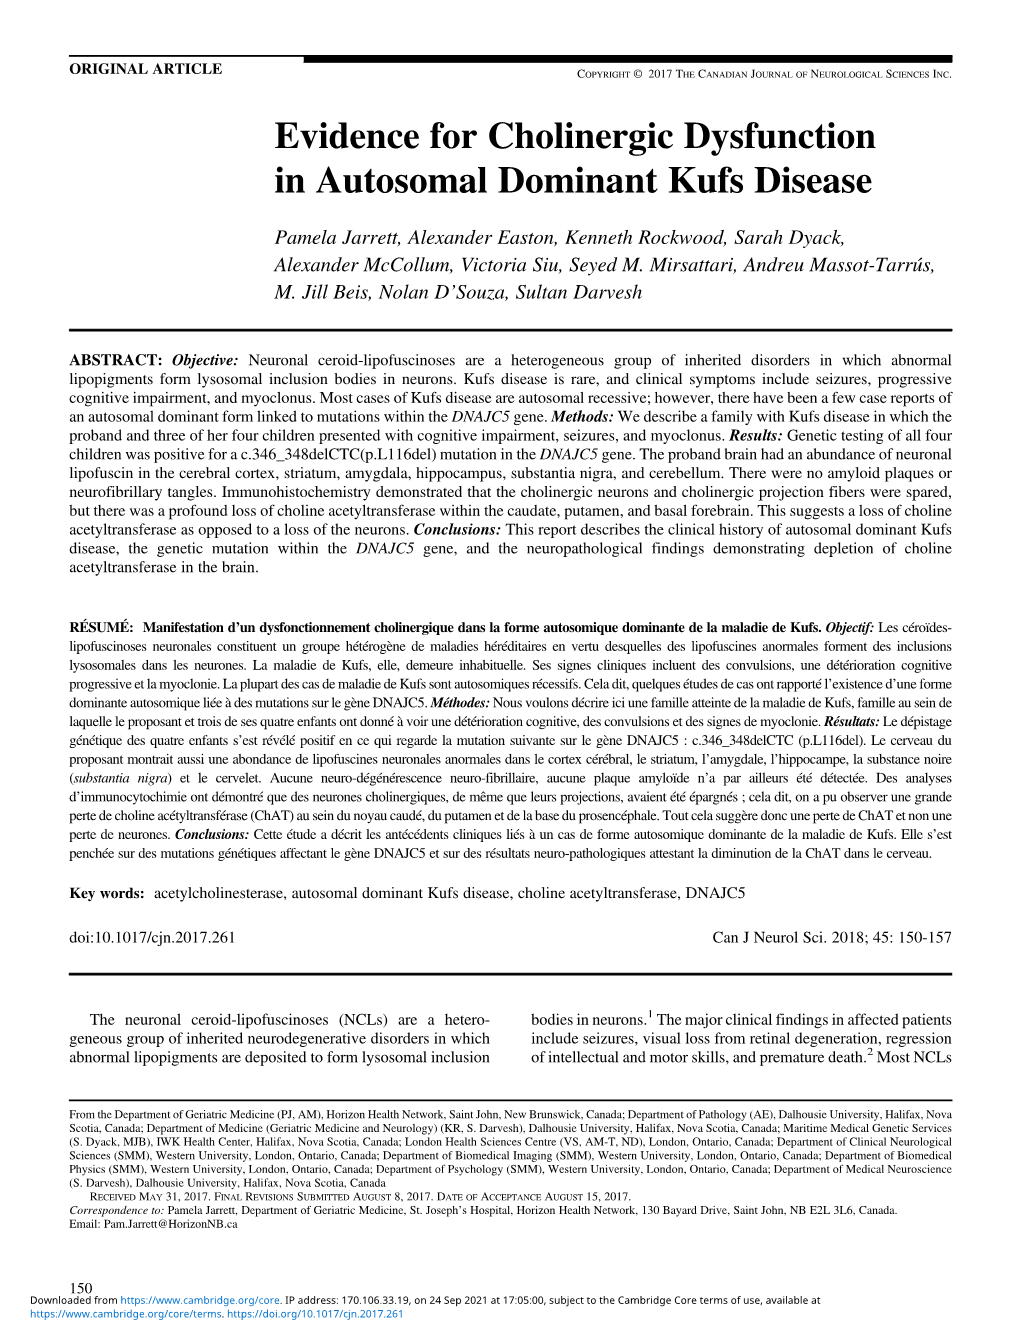 Evidence for Cholinergic Dysfunction in Autosomal Dominant Kufs Disease